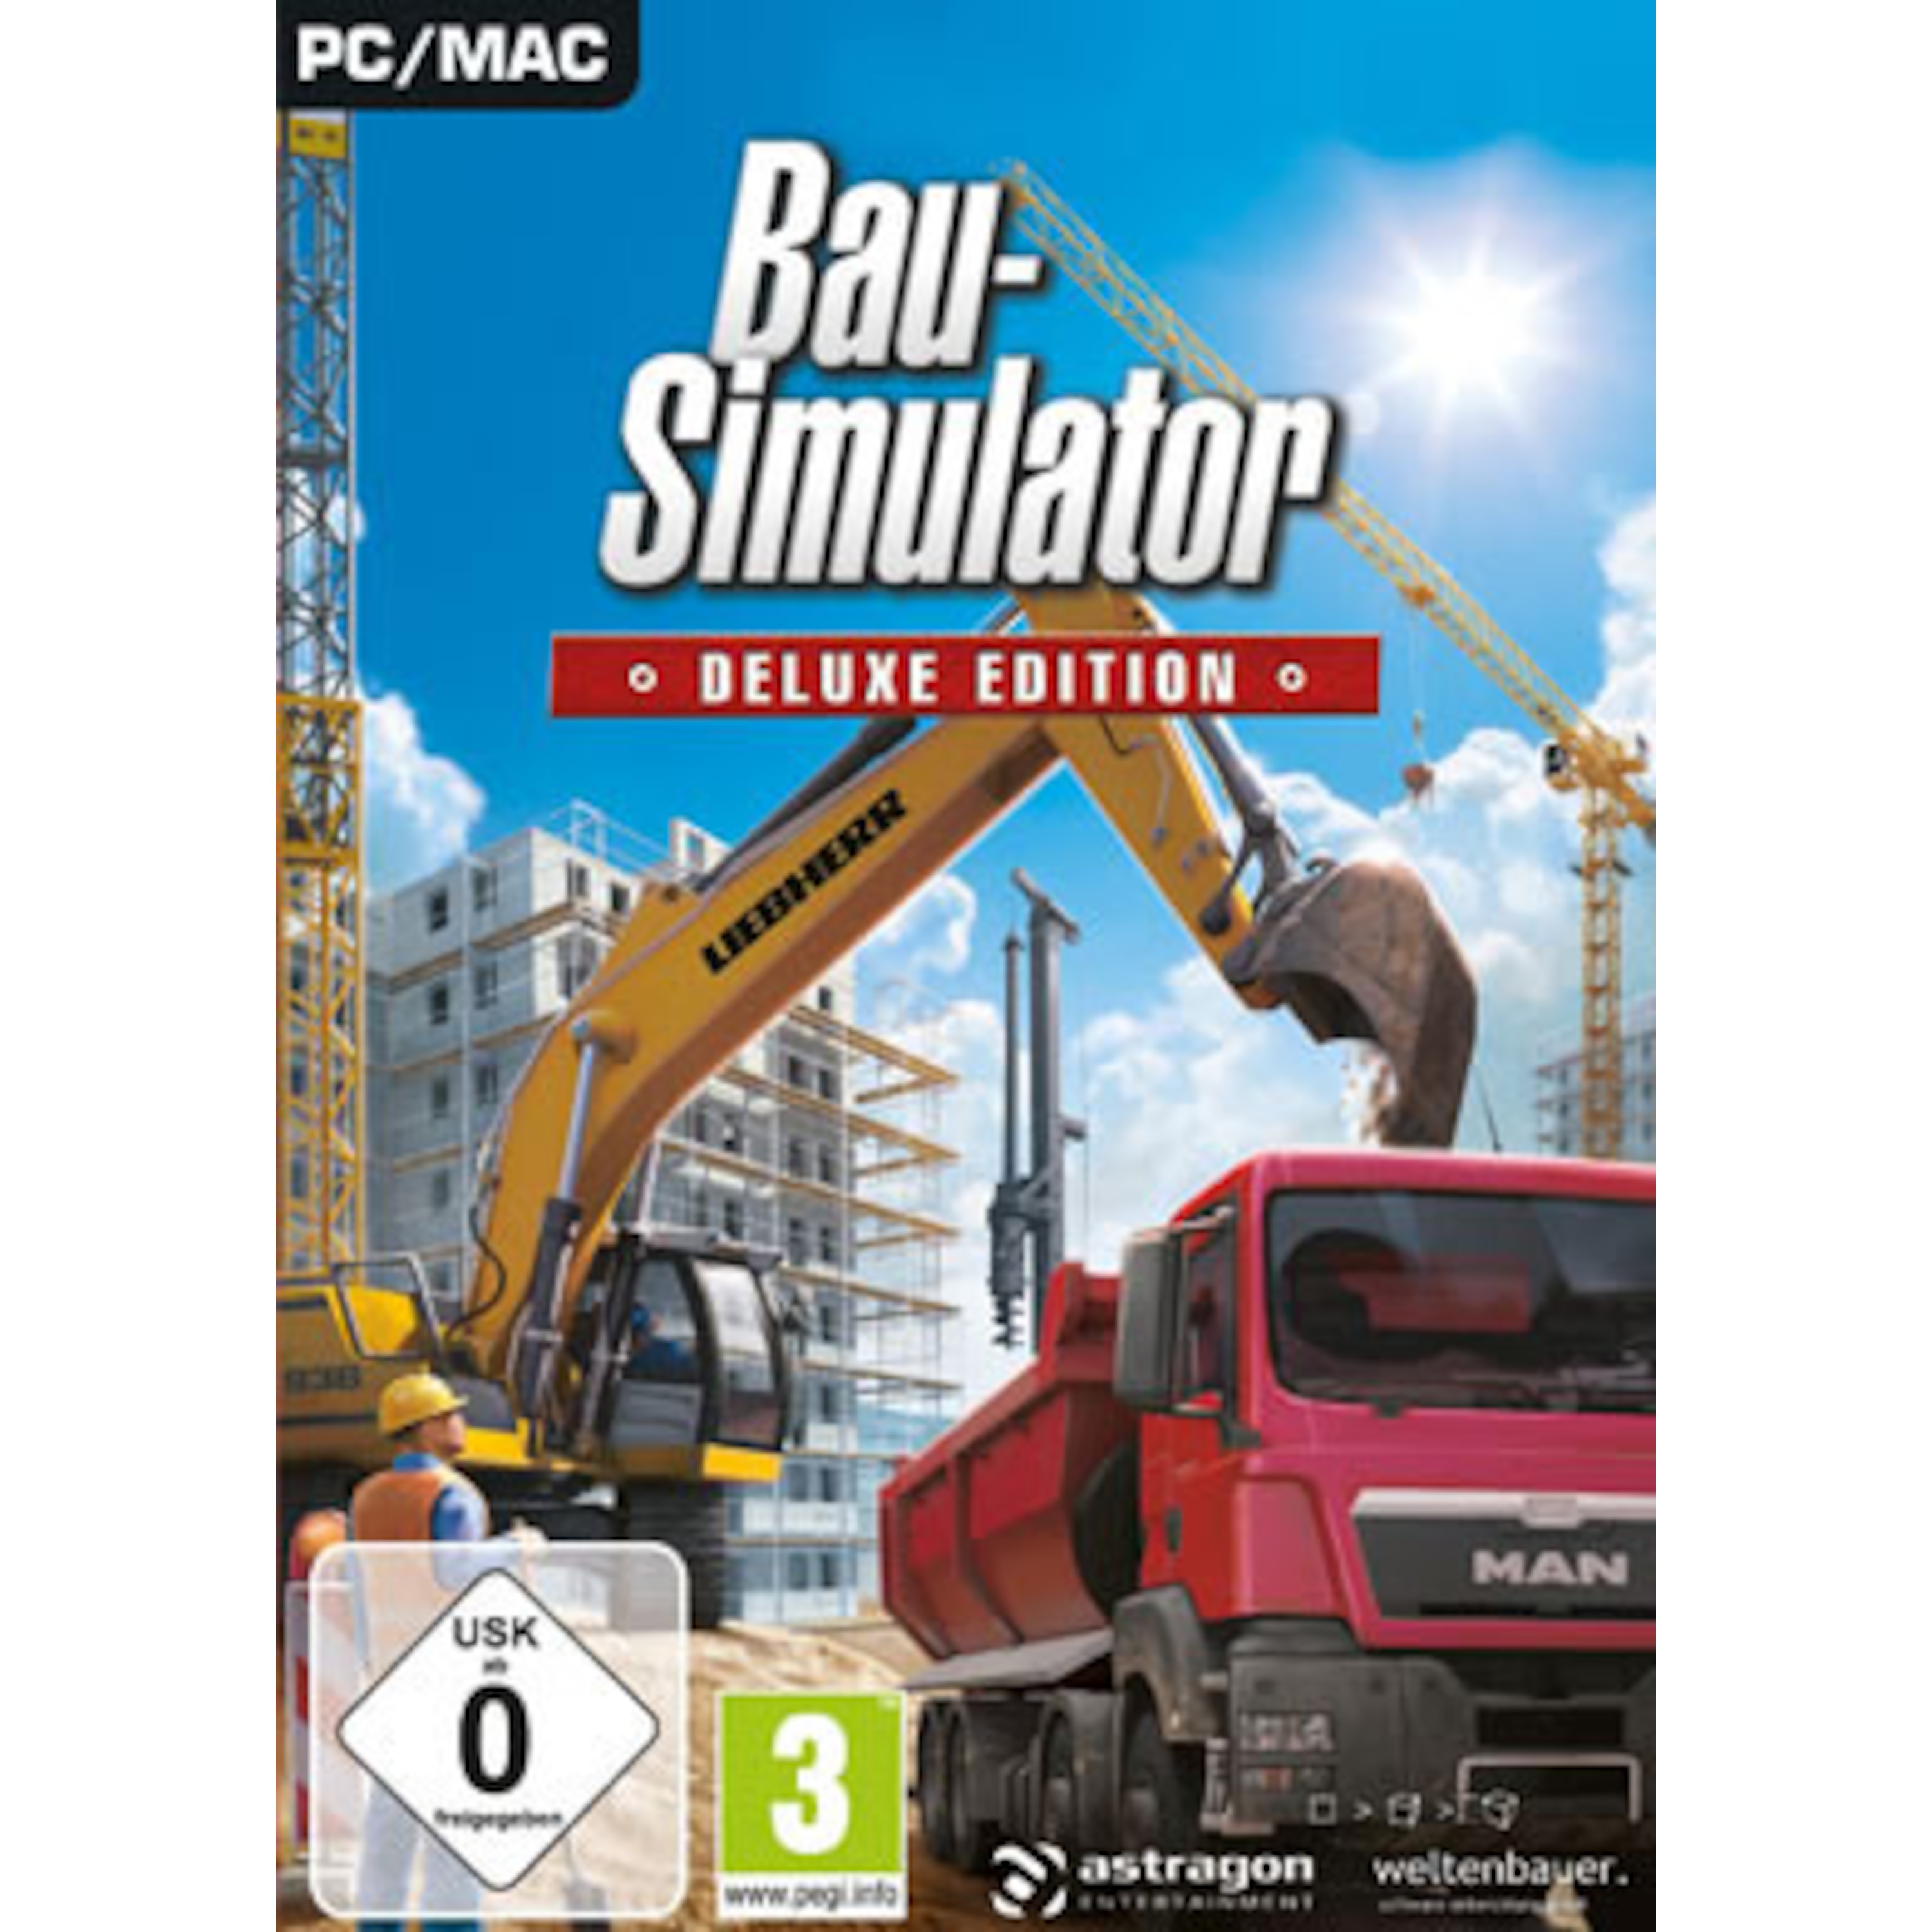 construction simulator 2015 mac torrent